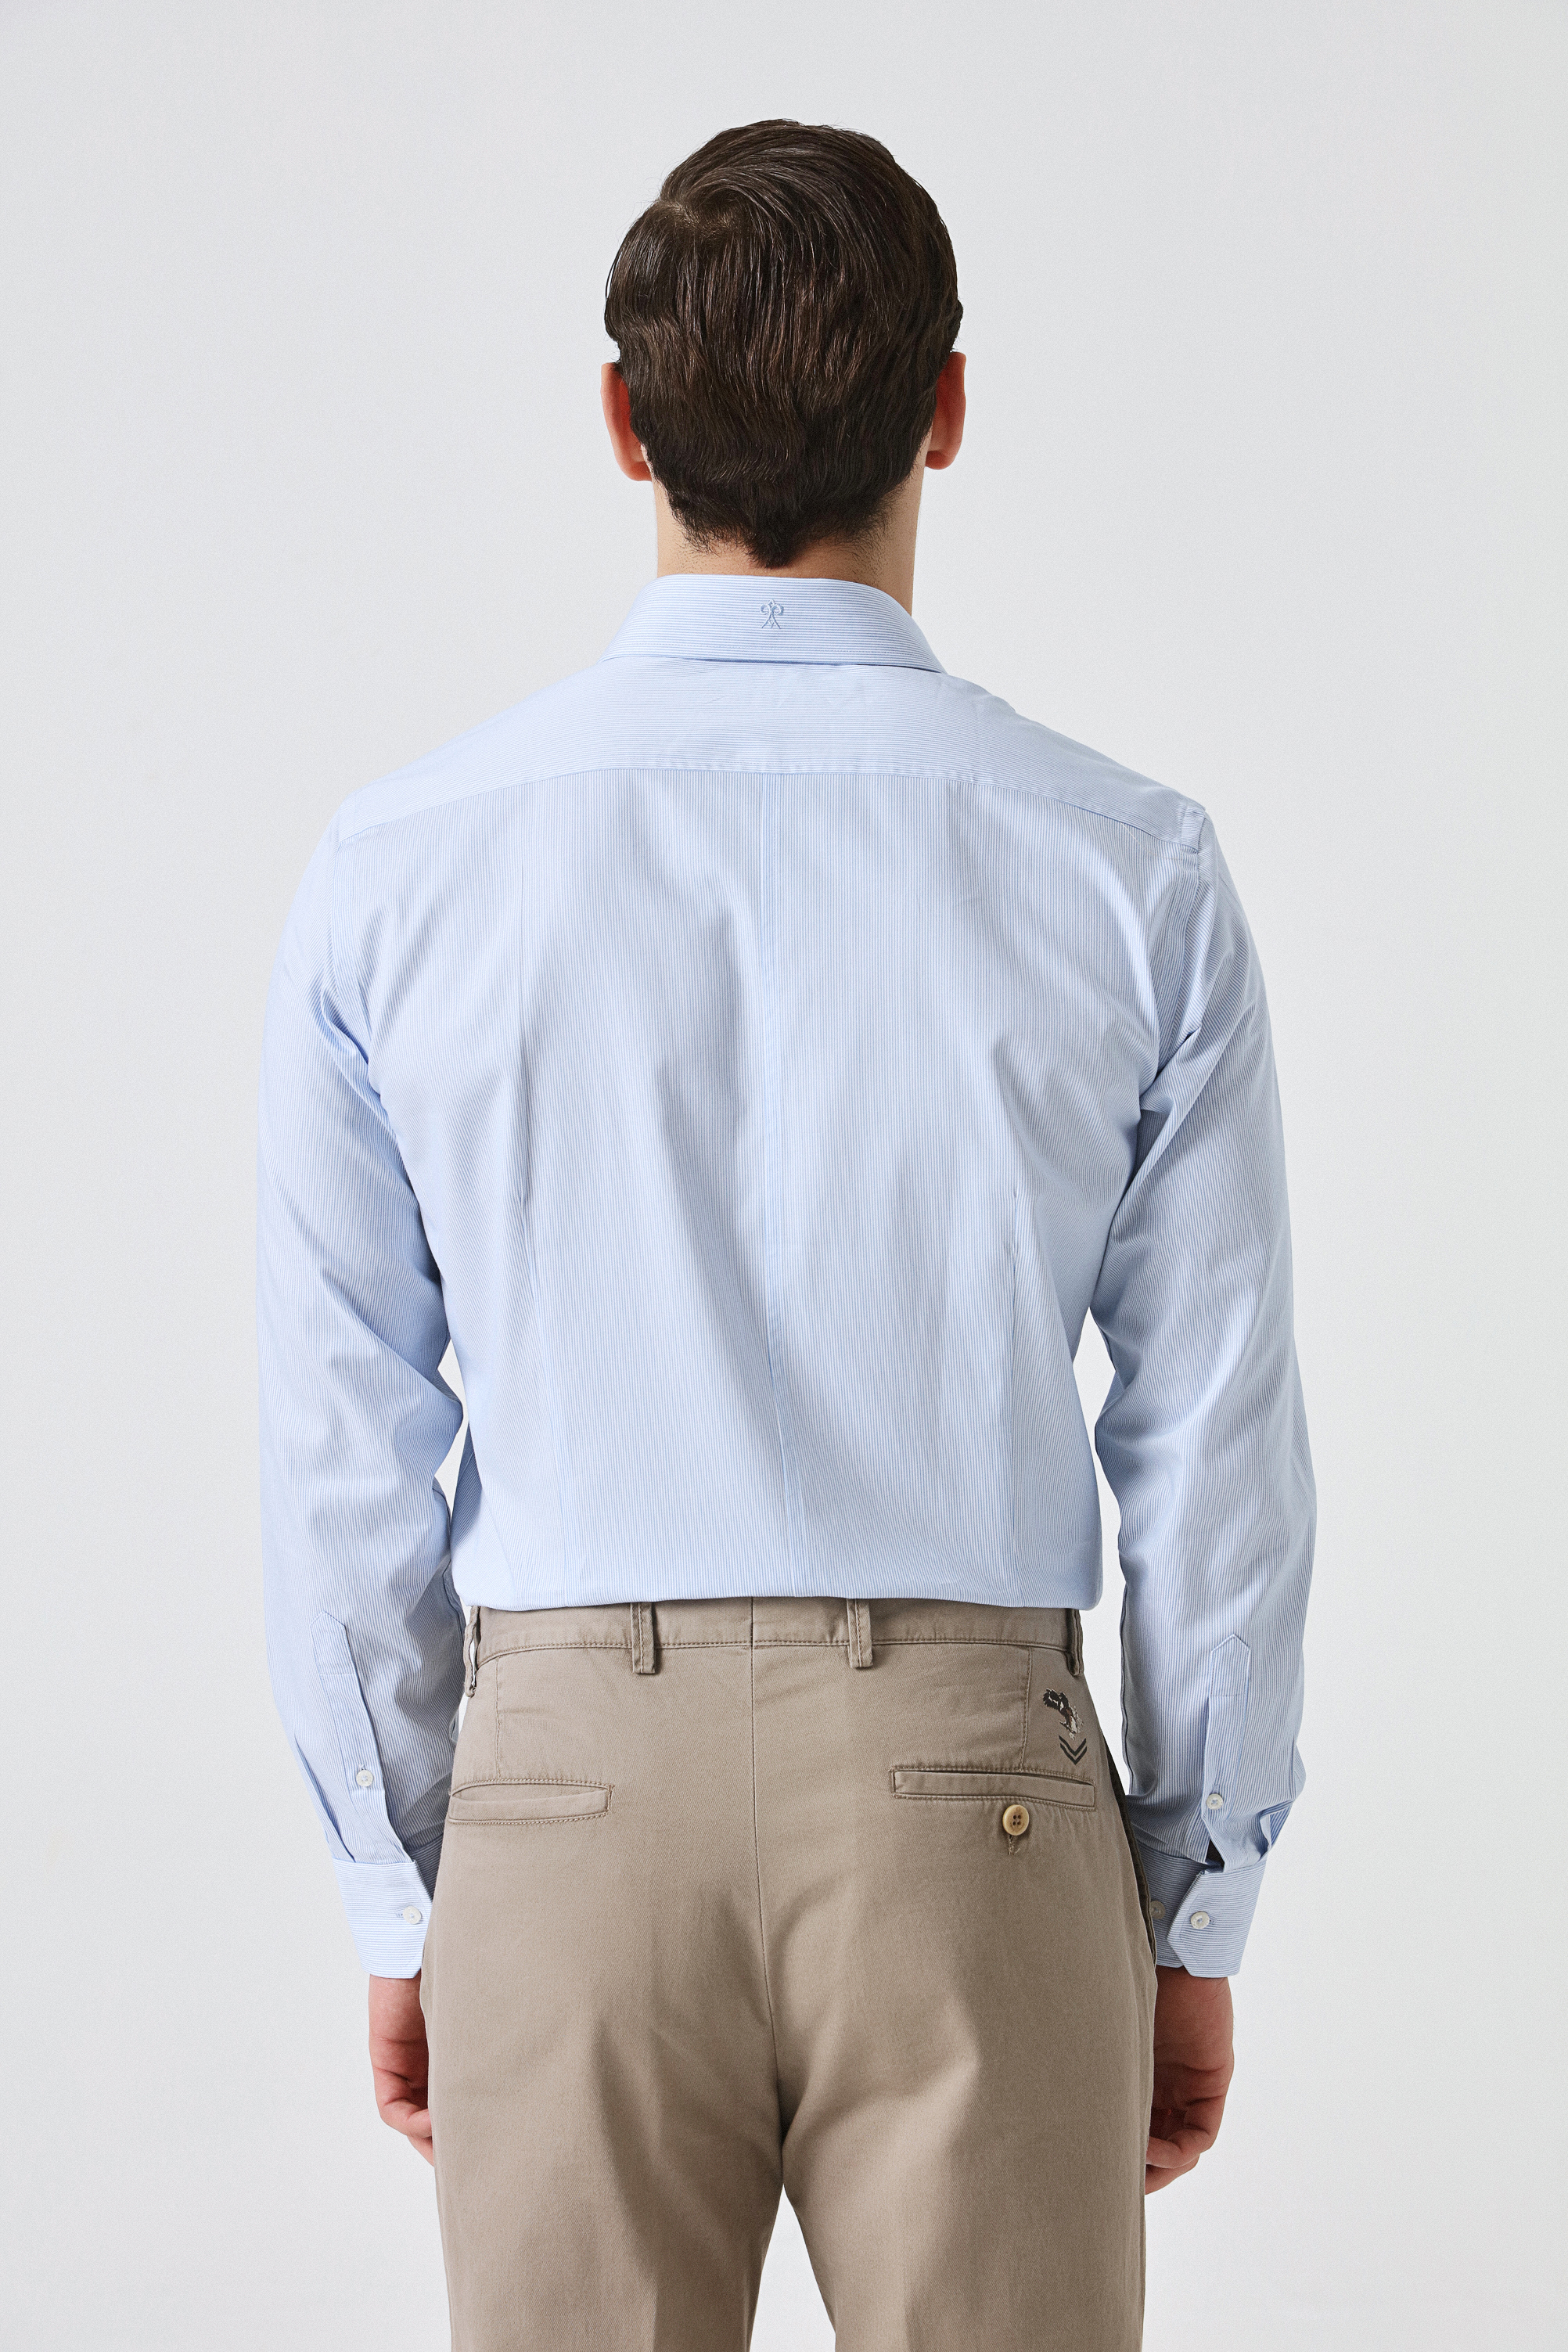 Damat Tween Damat Slim Fit Mavi %100 Pamuk Gömlek. 4